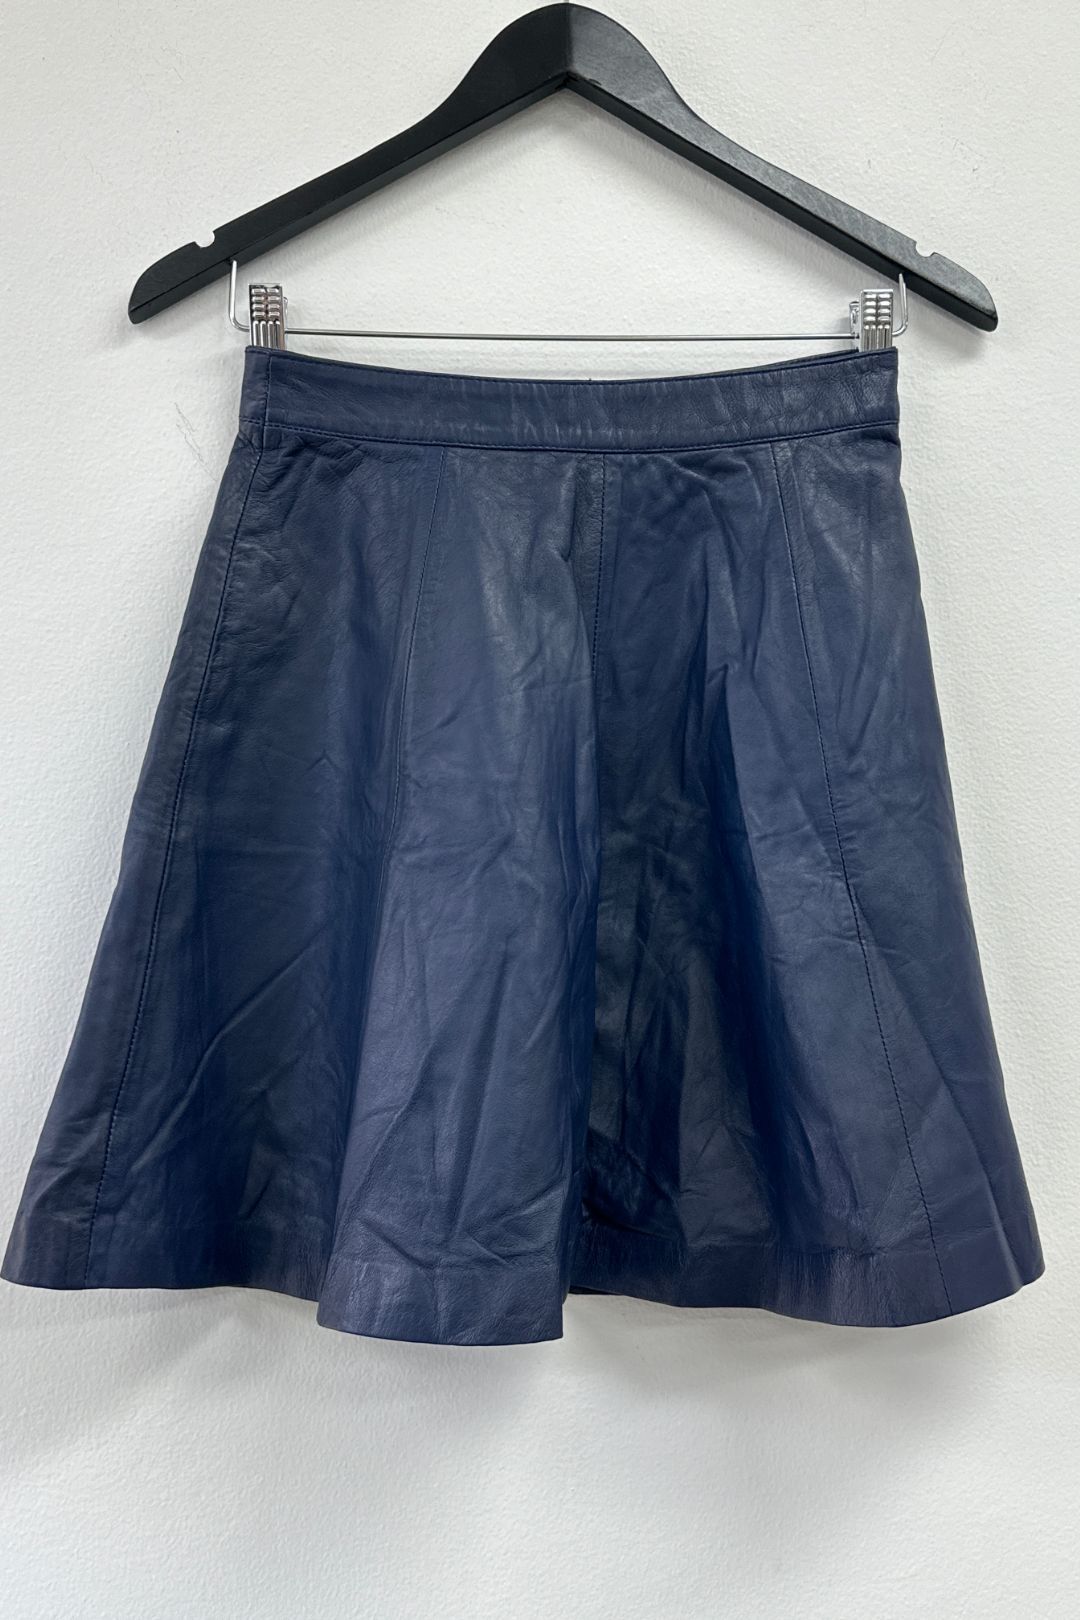 Alannah Hill - Blue Leather Skater Mini Skirt